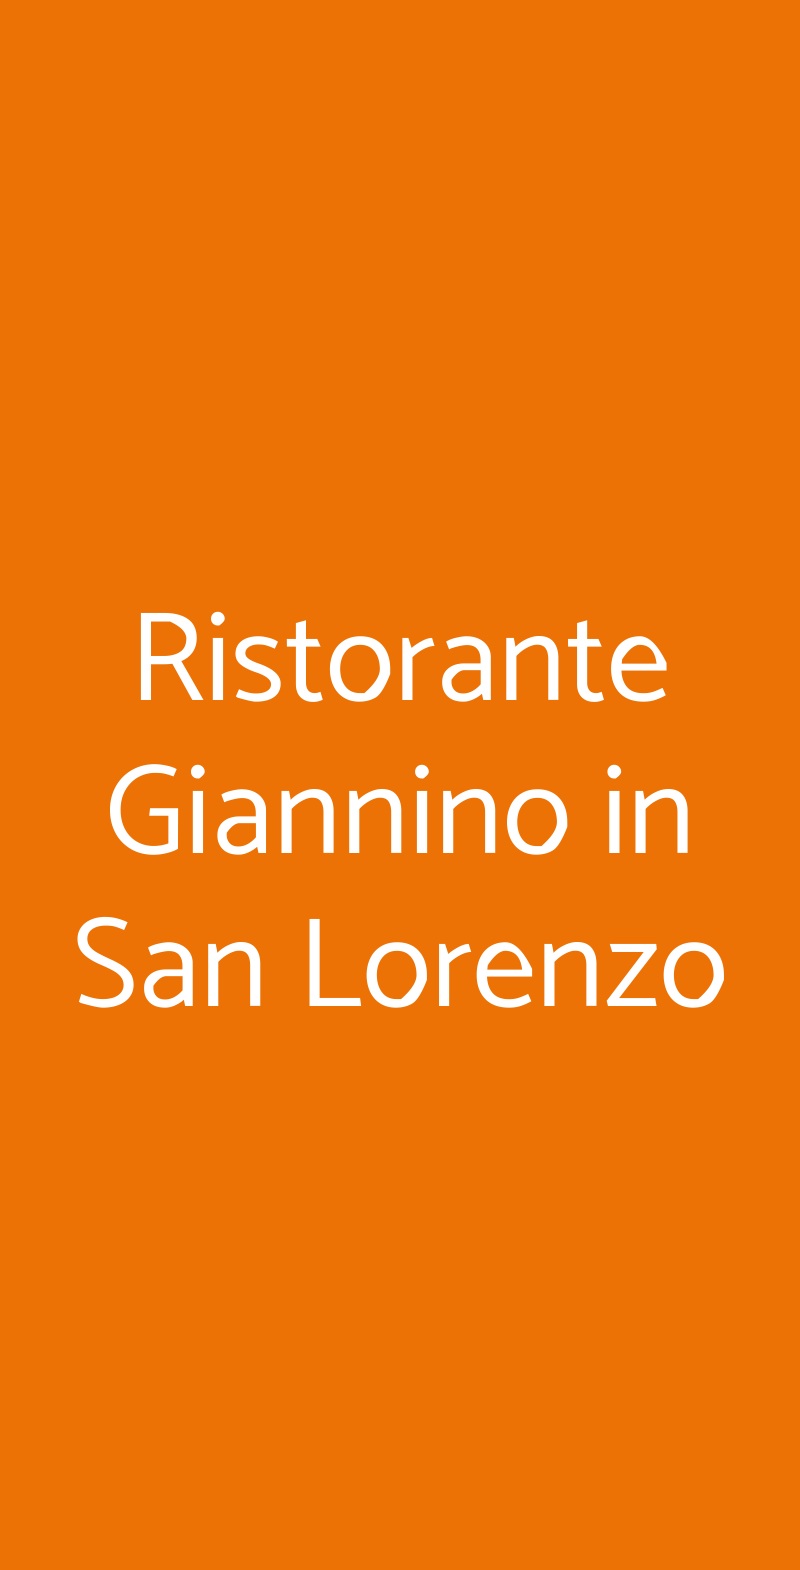 Ristorante Giannino in San Lorenzo Firenze menù 1 pagina